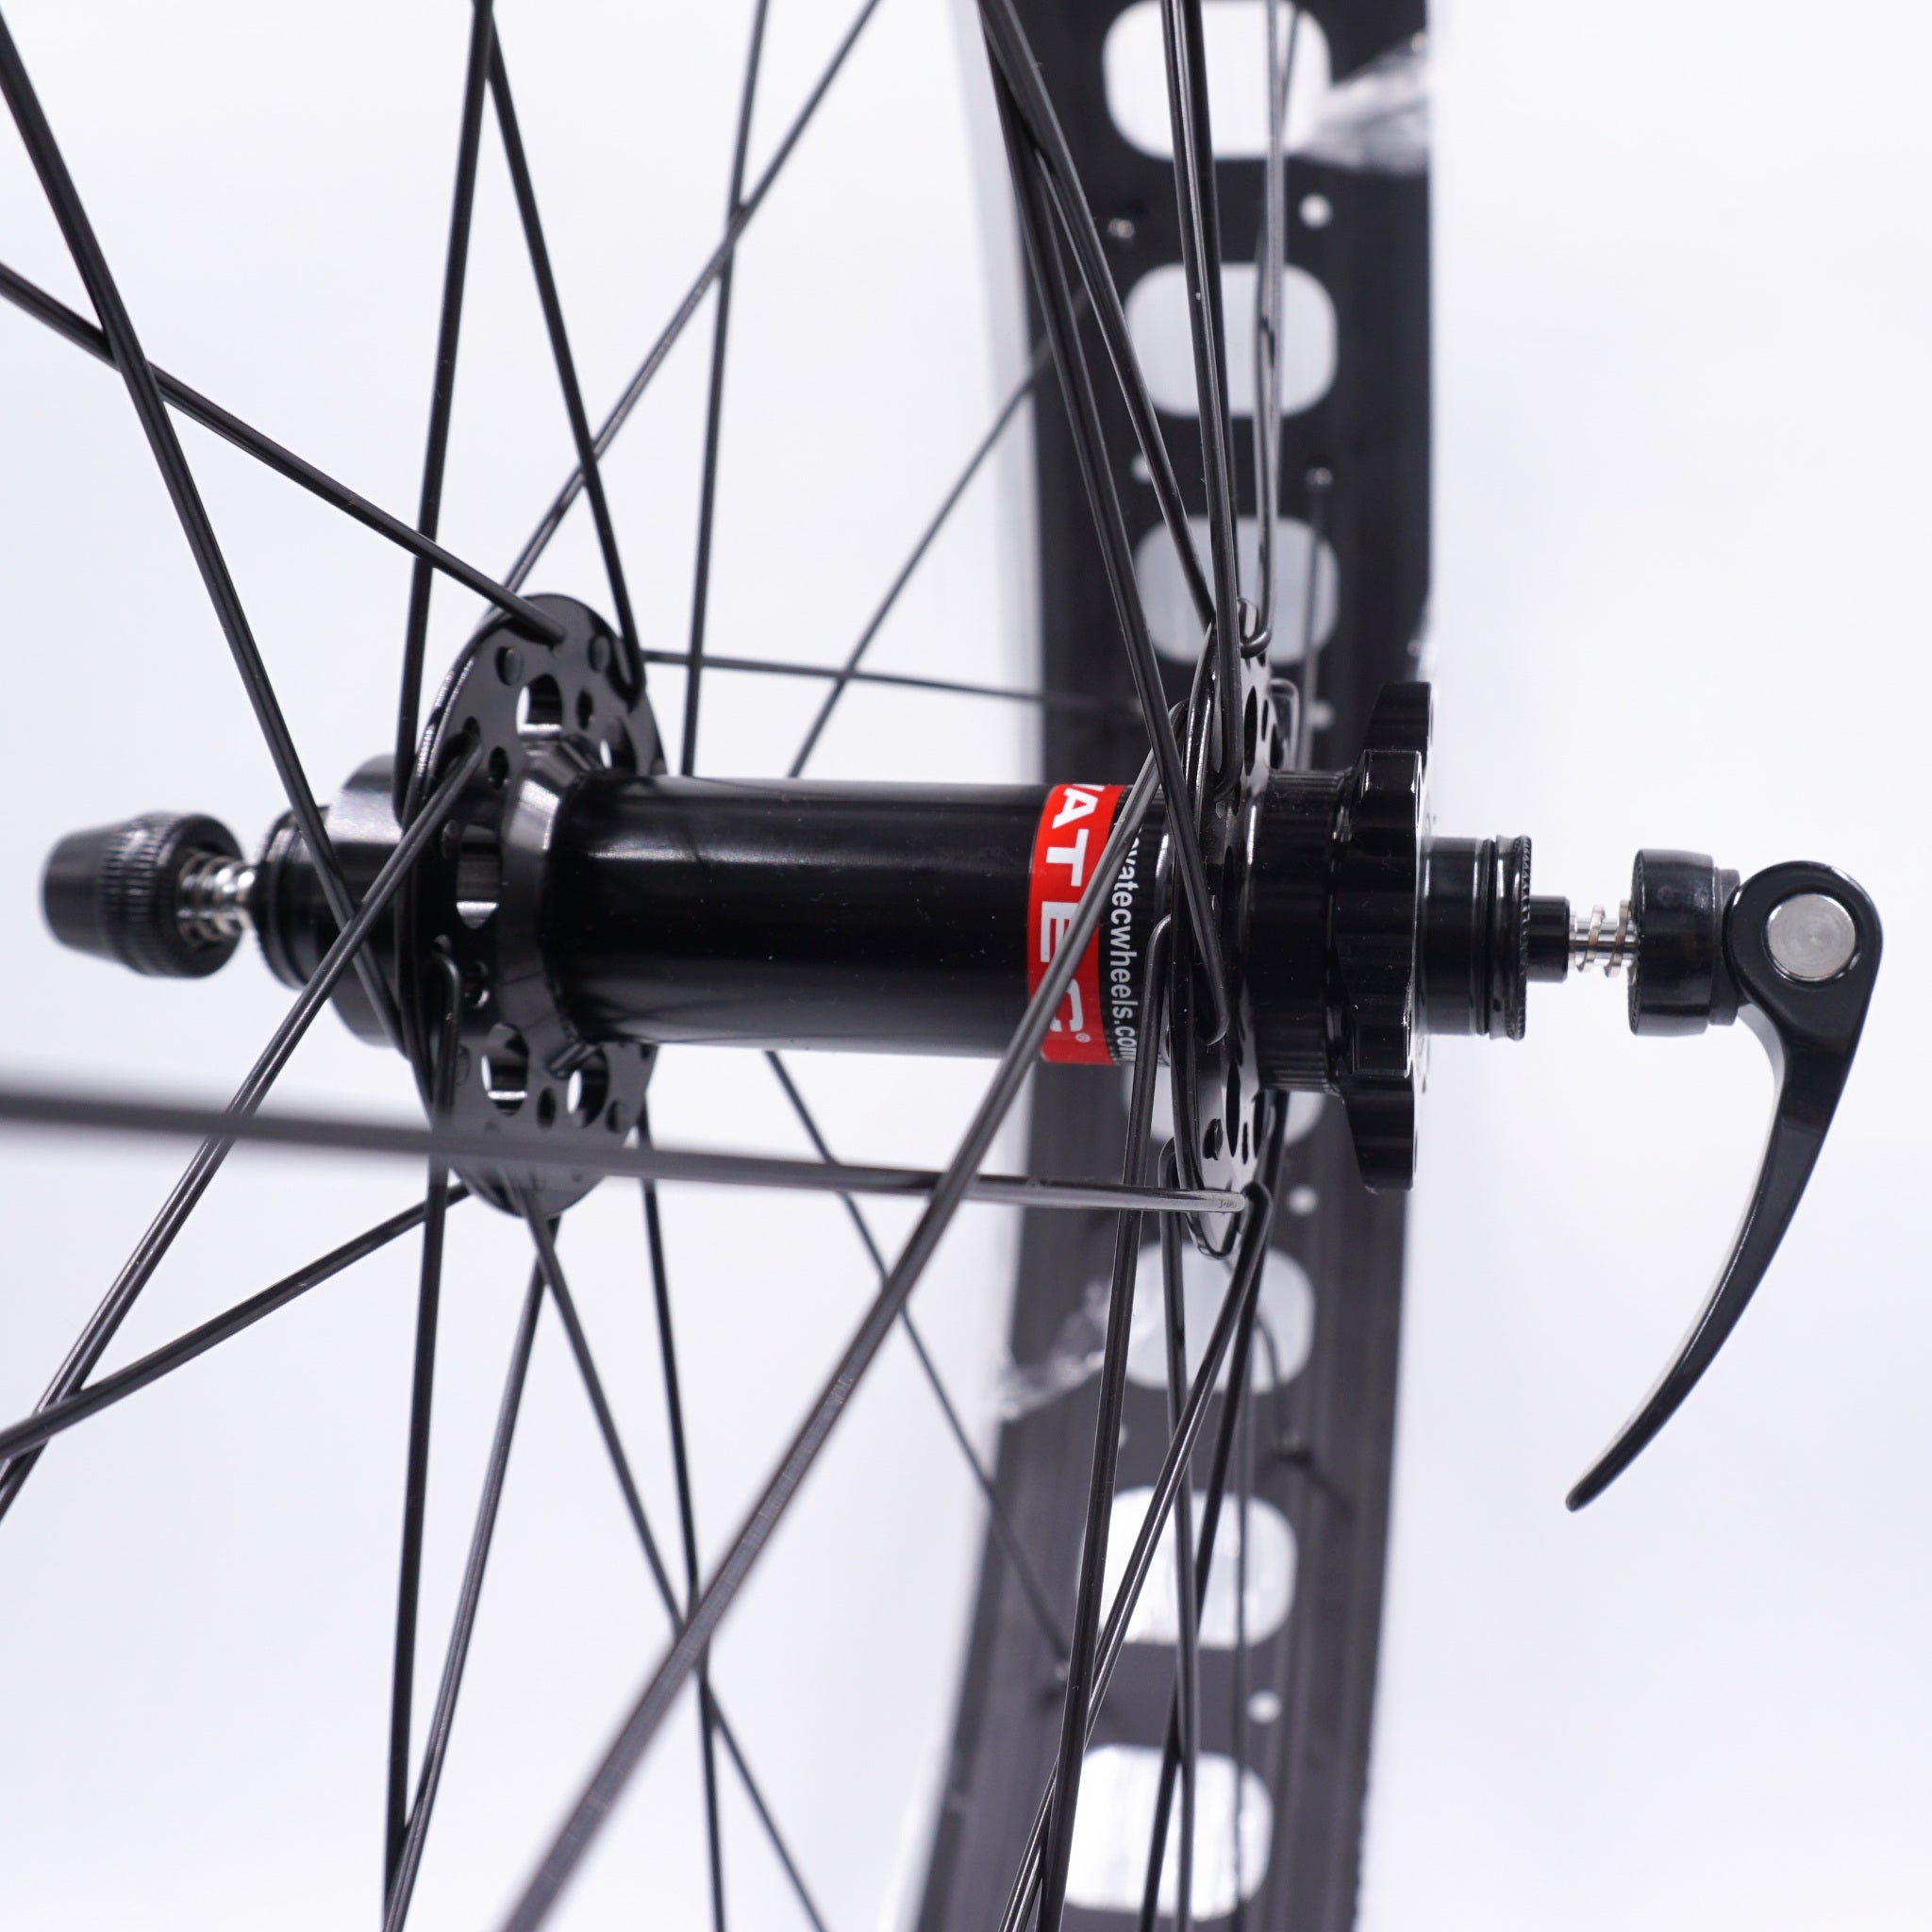 Alex Blizzerk 90 FRONT 26" Fat Bike Wheel Novatec 135mm x 9mm Tubeless Ready - The Bikesmiths